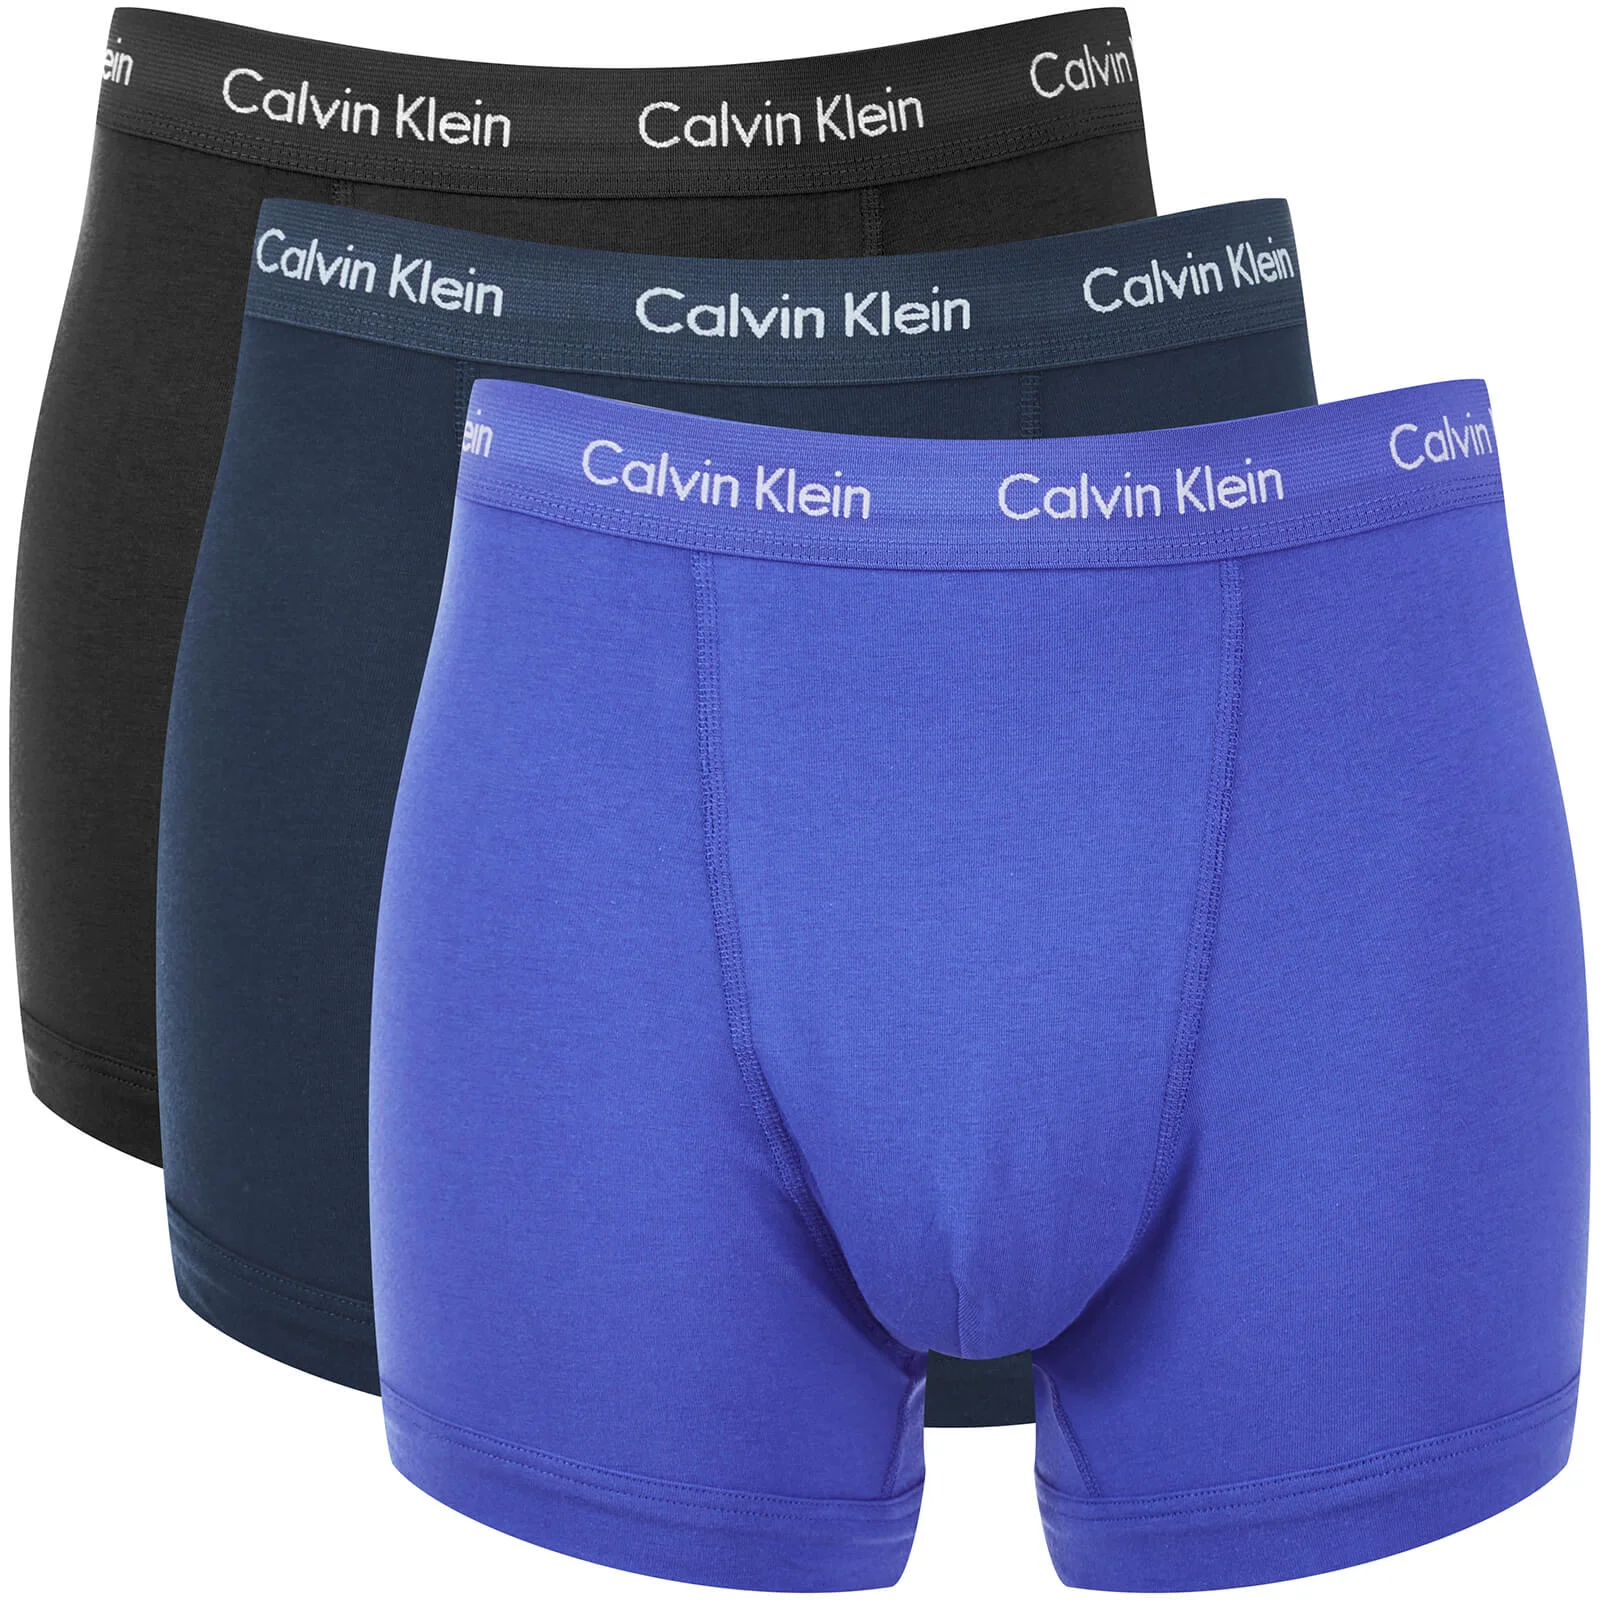 Calvin Klein Men's 3 Pack Trunk Boxer Shorts - Black/Blue Image 1